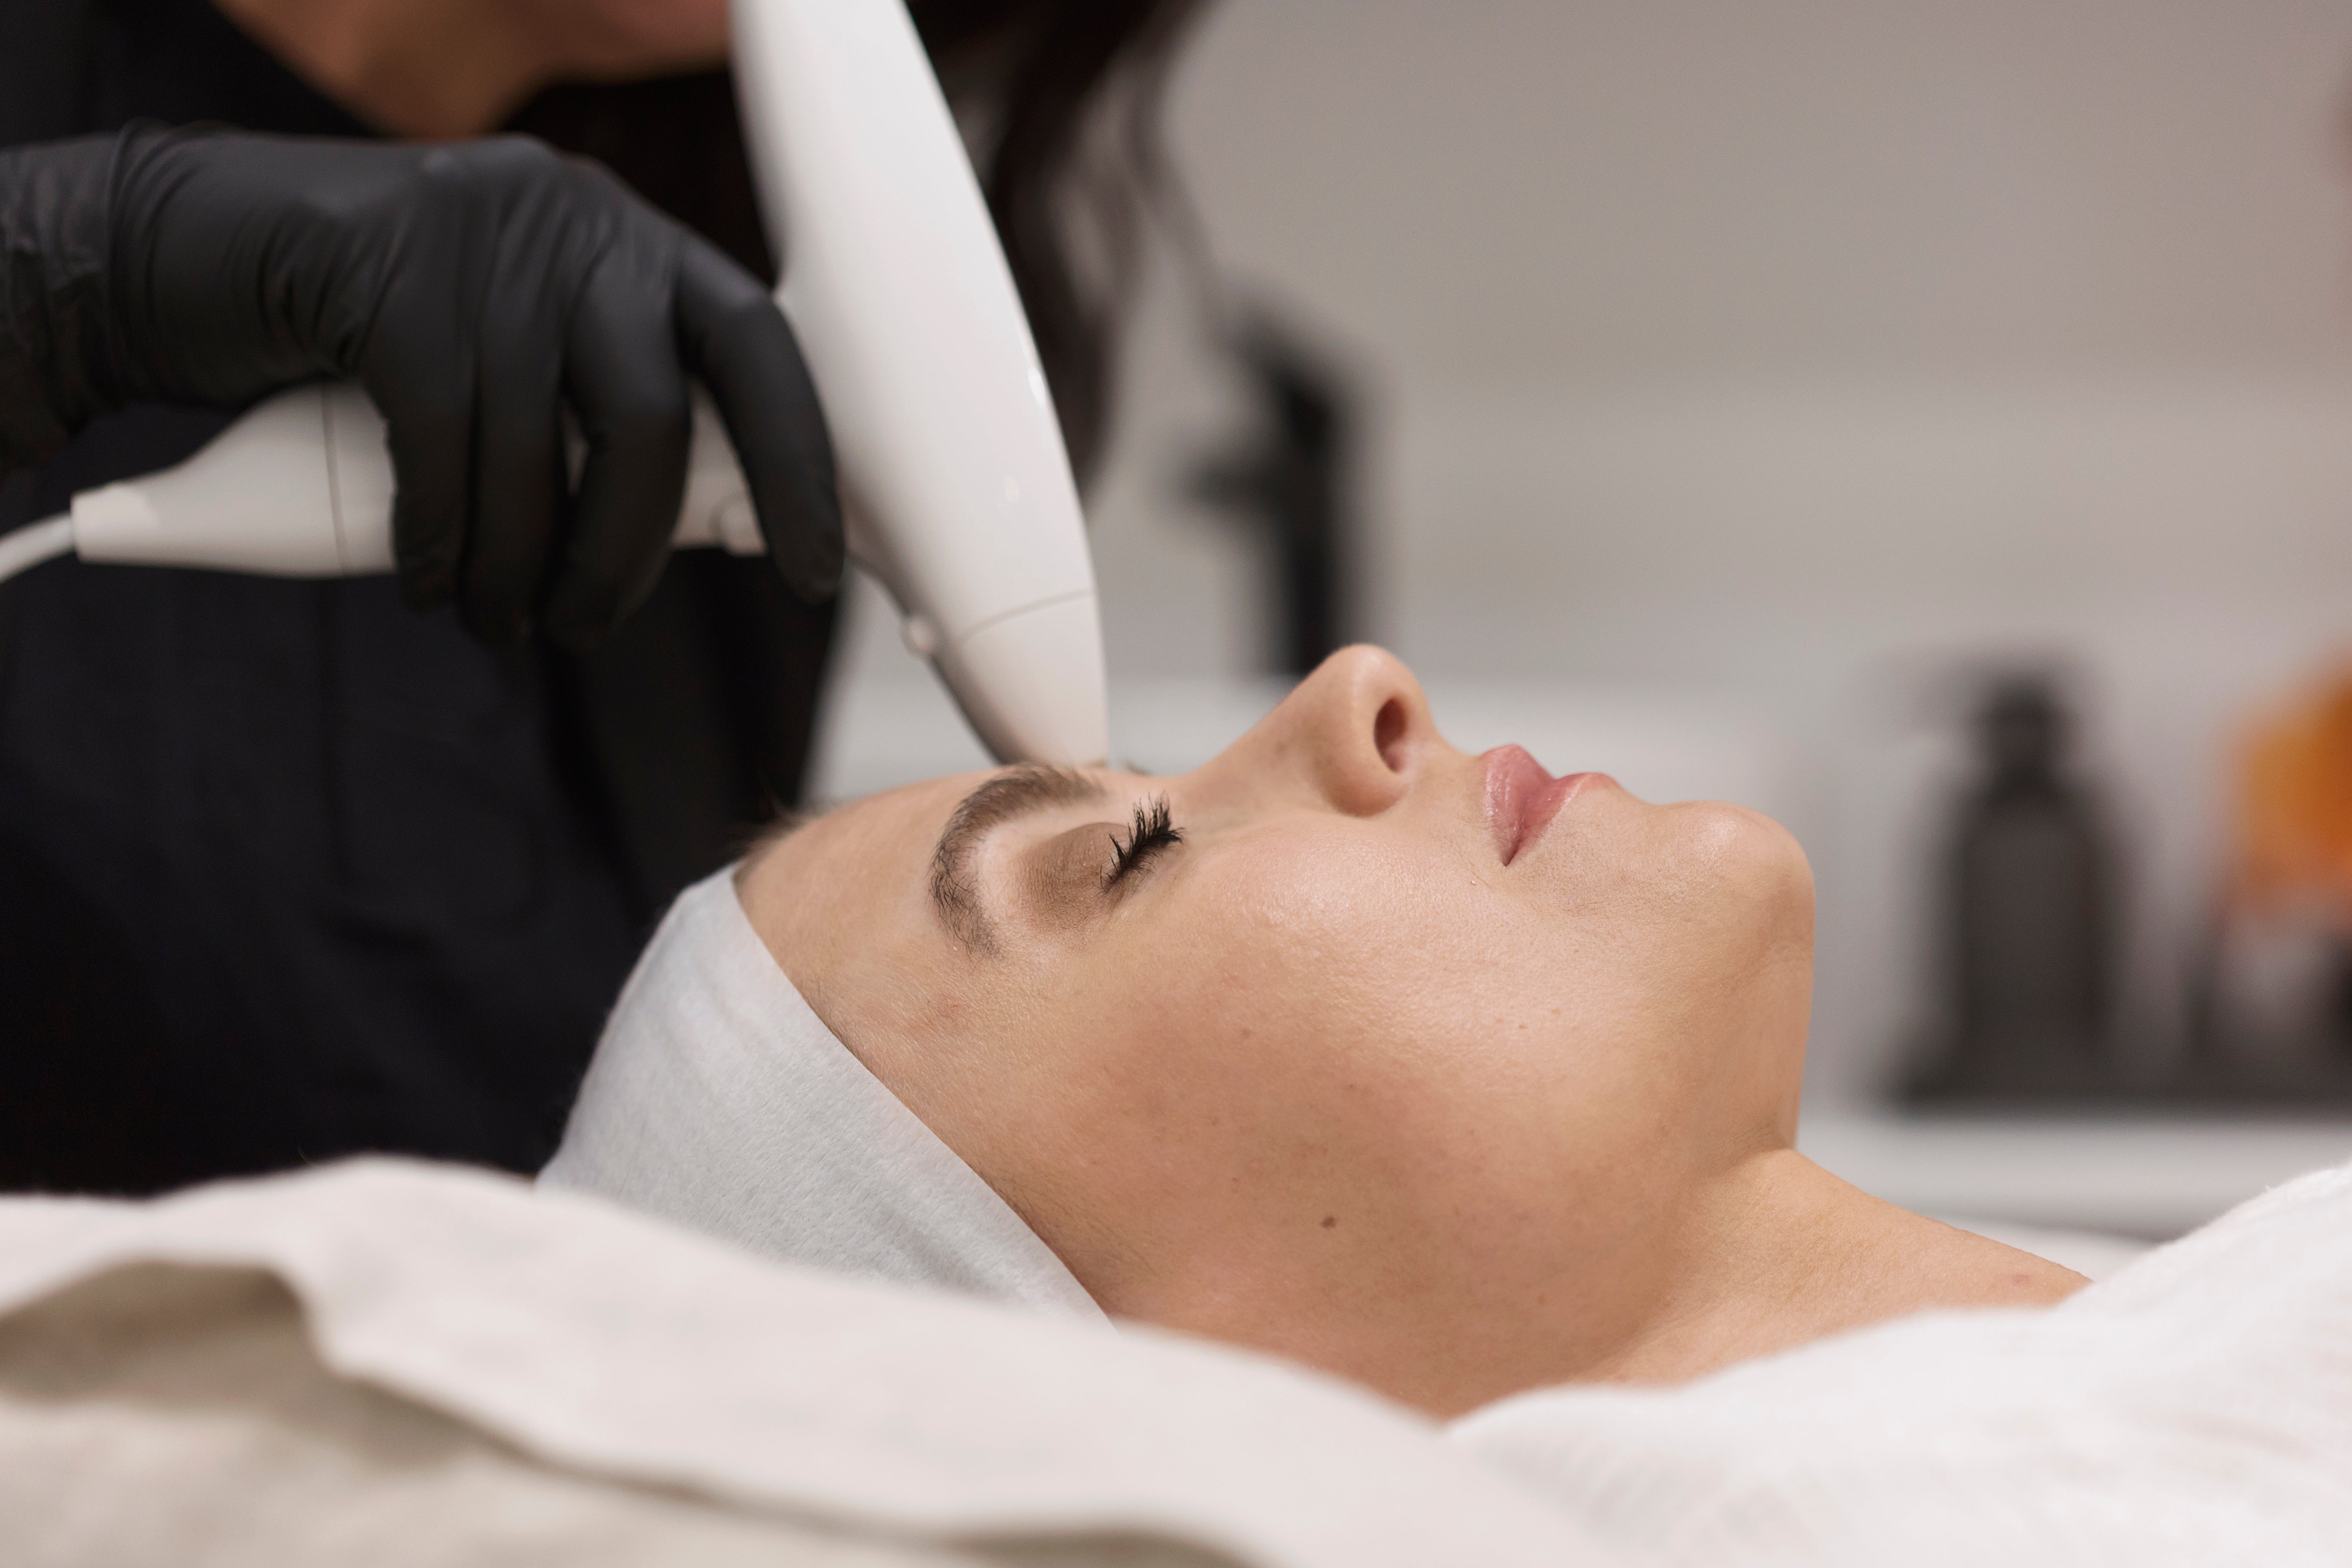 Venus Tribella ultimate skin rejuvenation treatment at Base Aesthetic clinic South Perth.